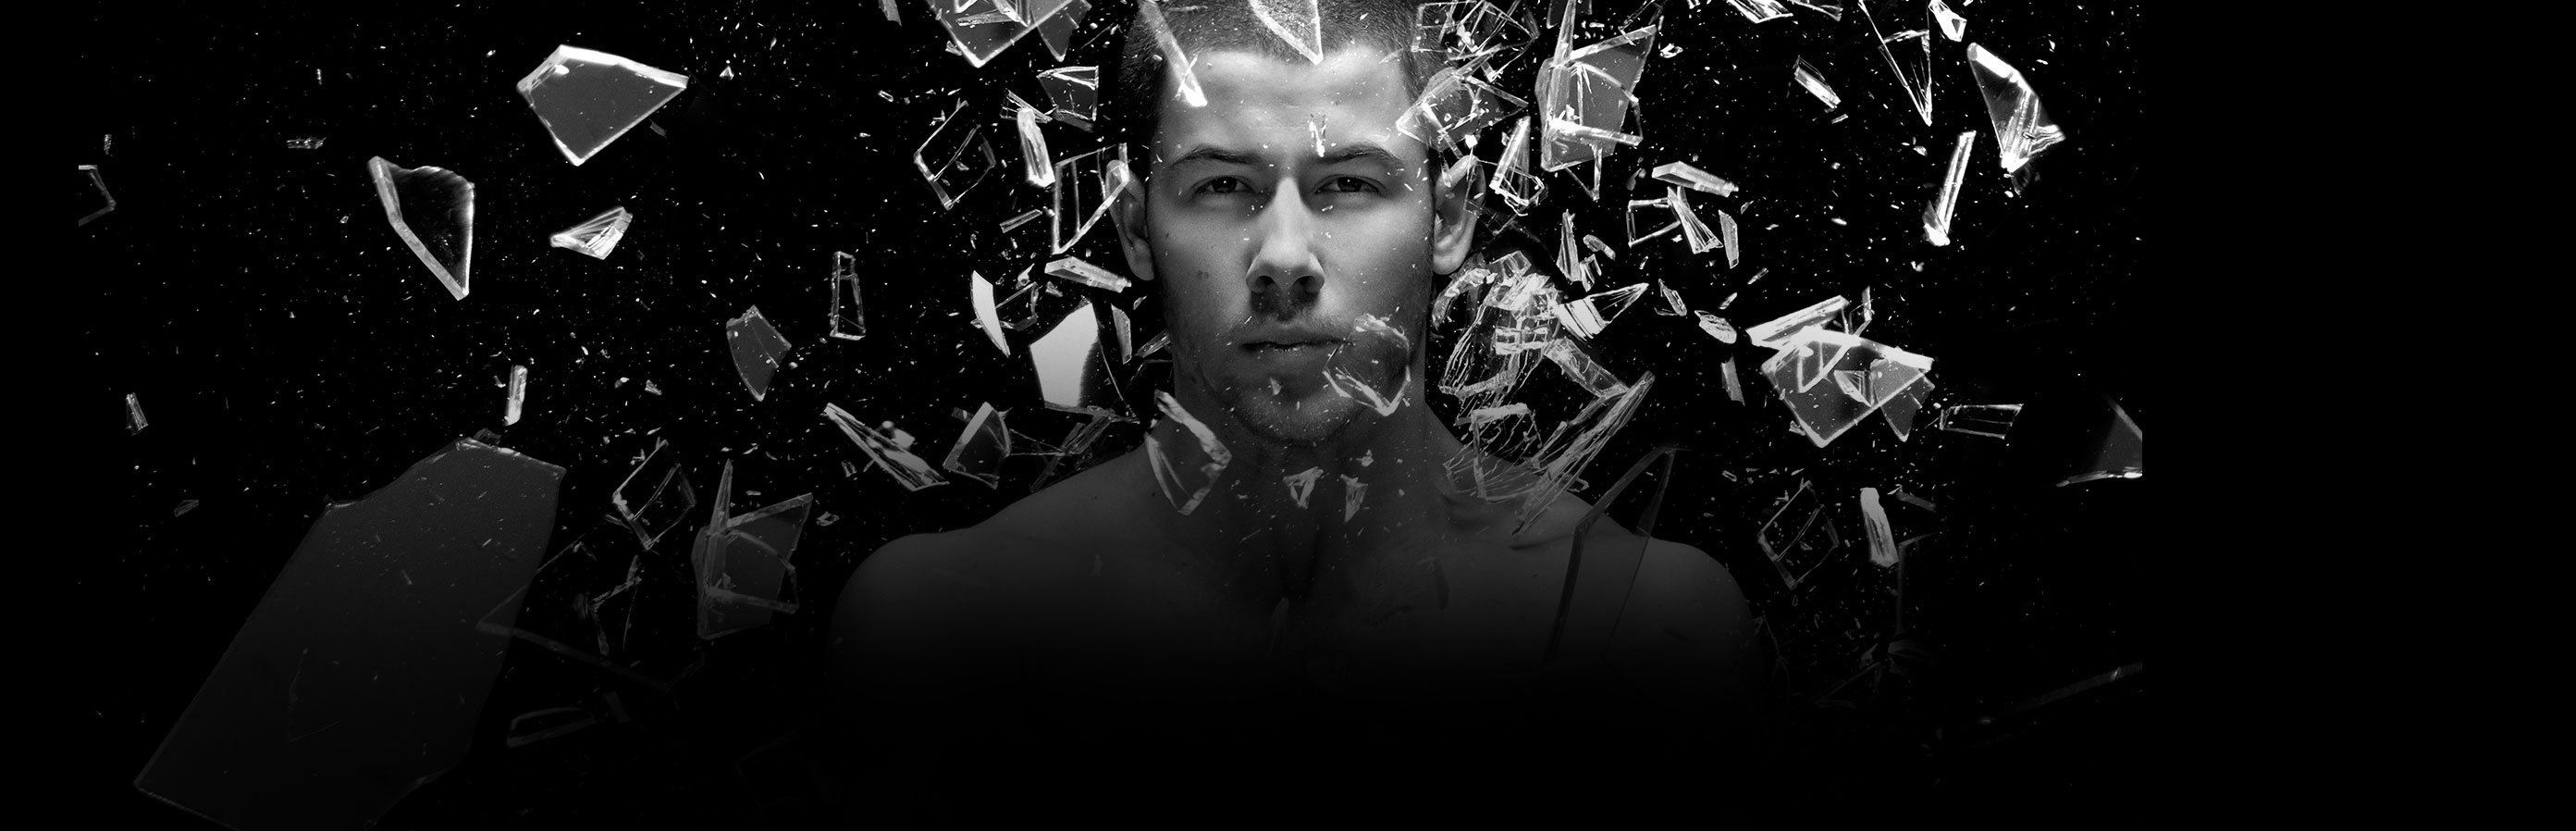 Nick Jonas Lyrics, Music, News and Biography | MetroLyrics2785 x 898